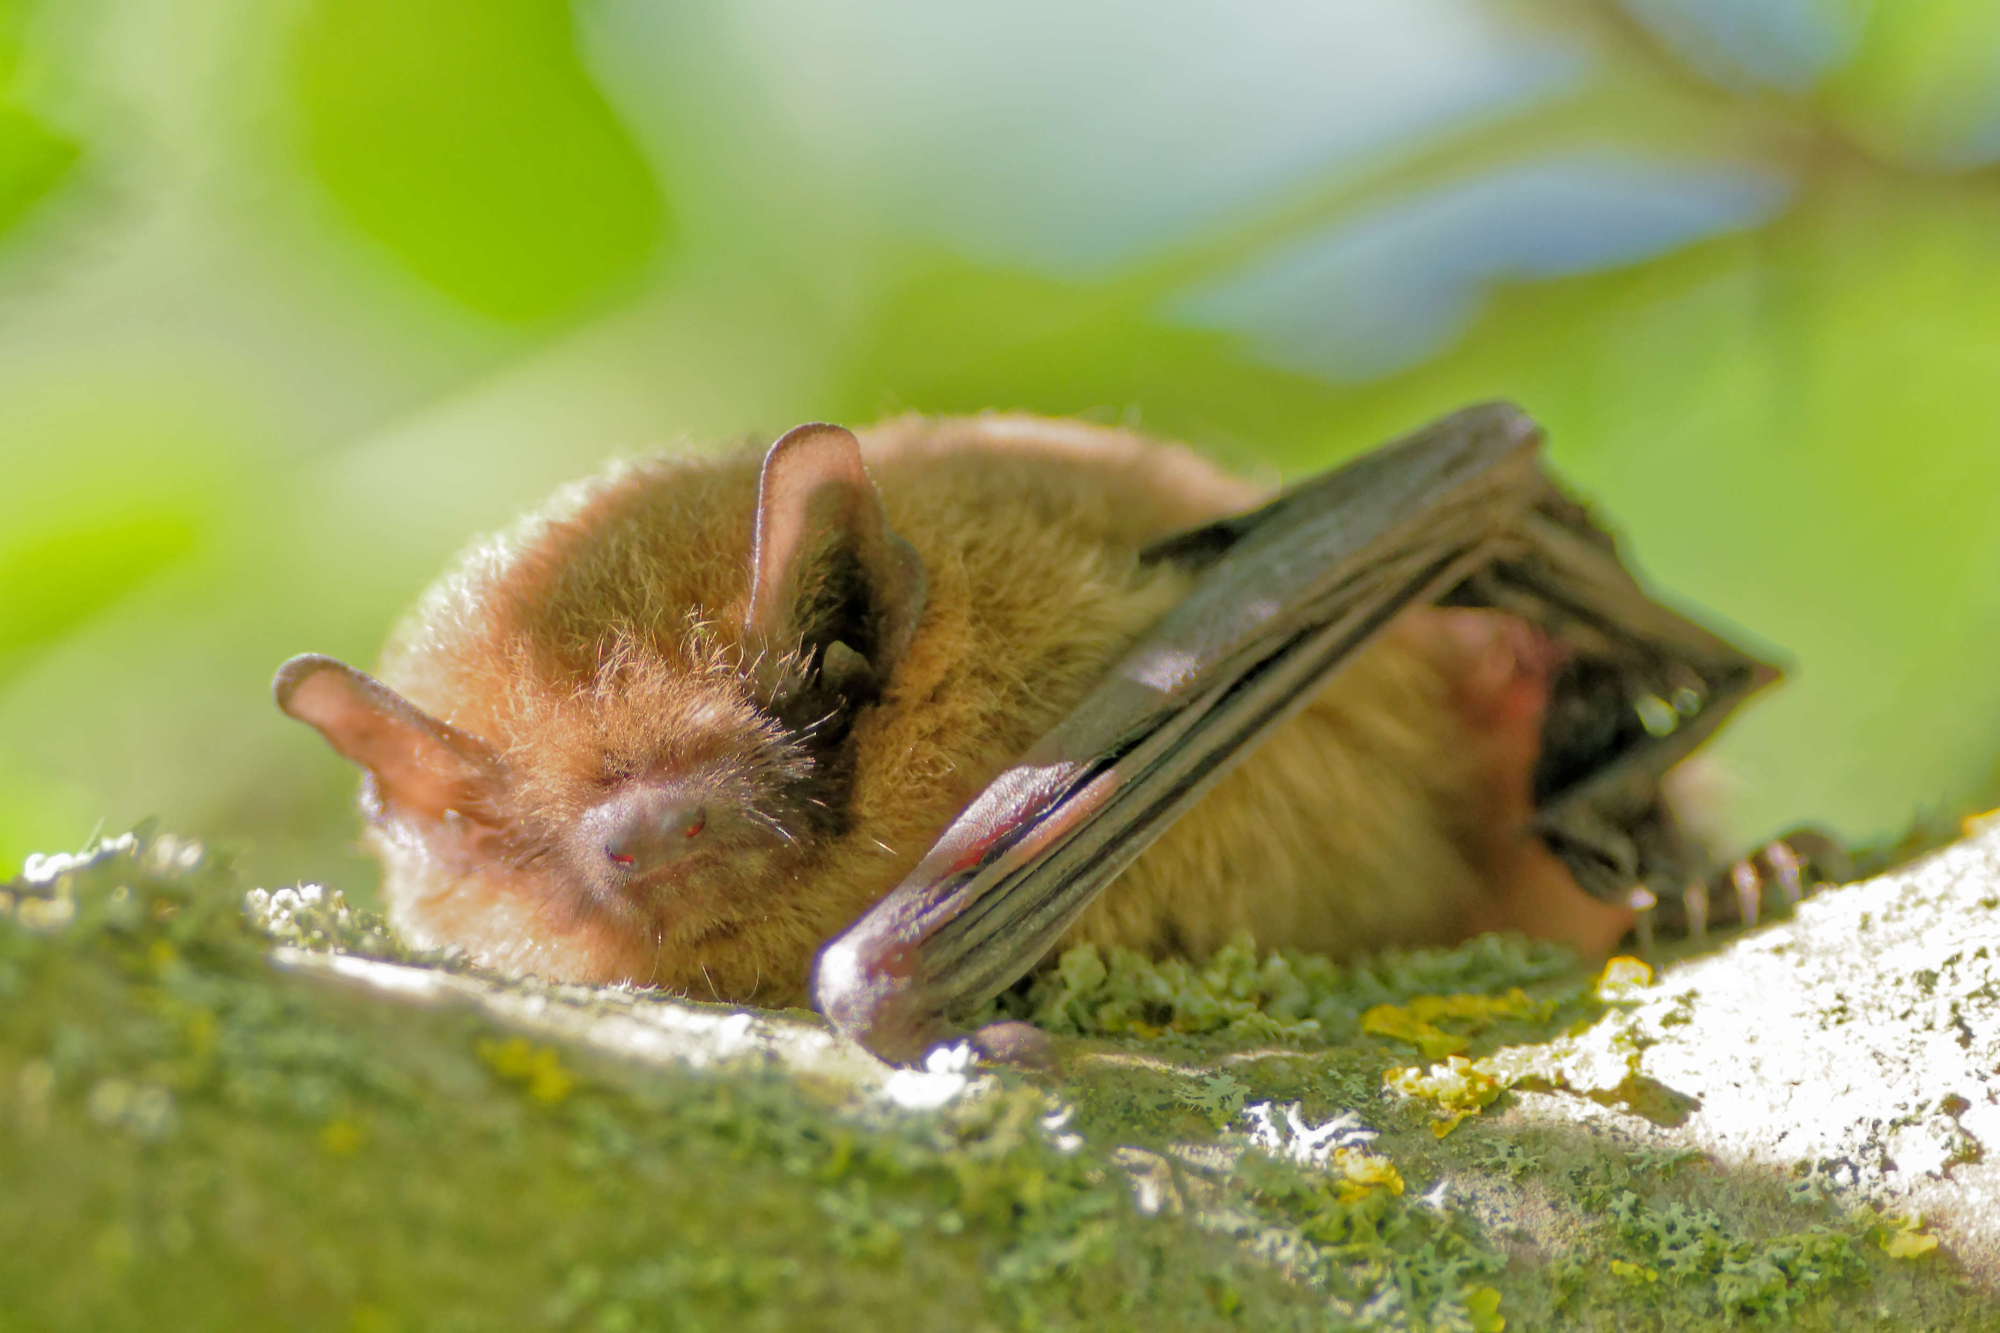 Batty Bat